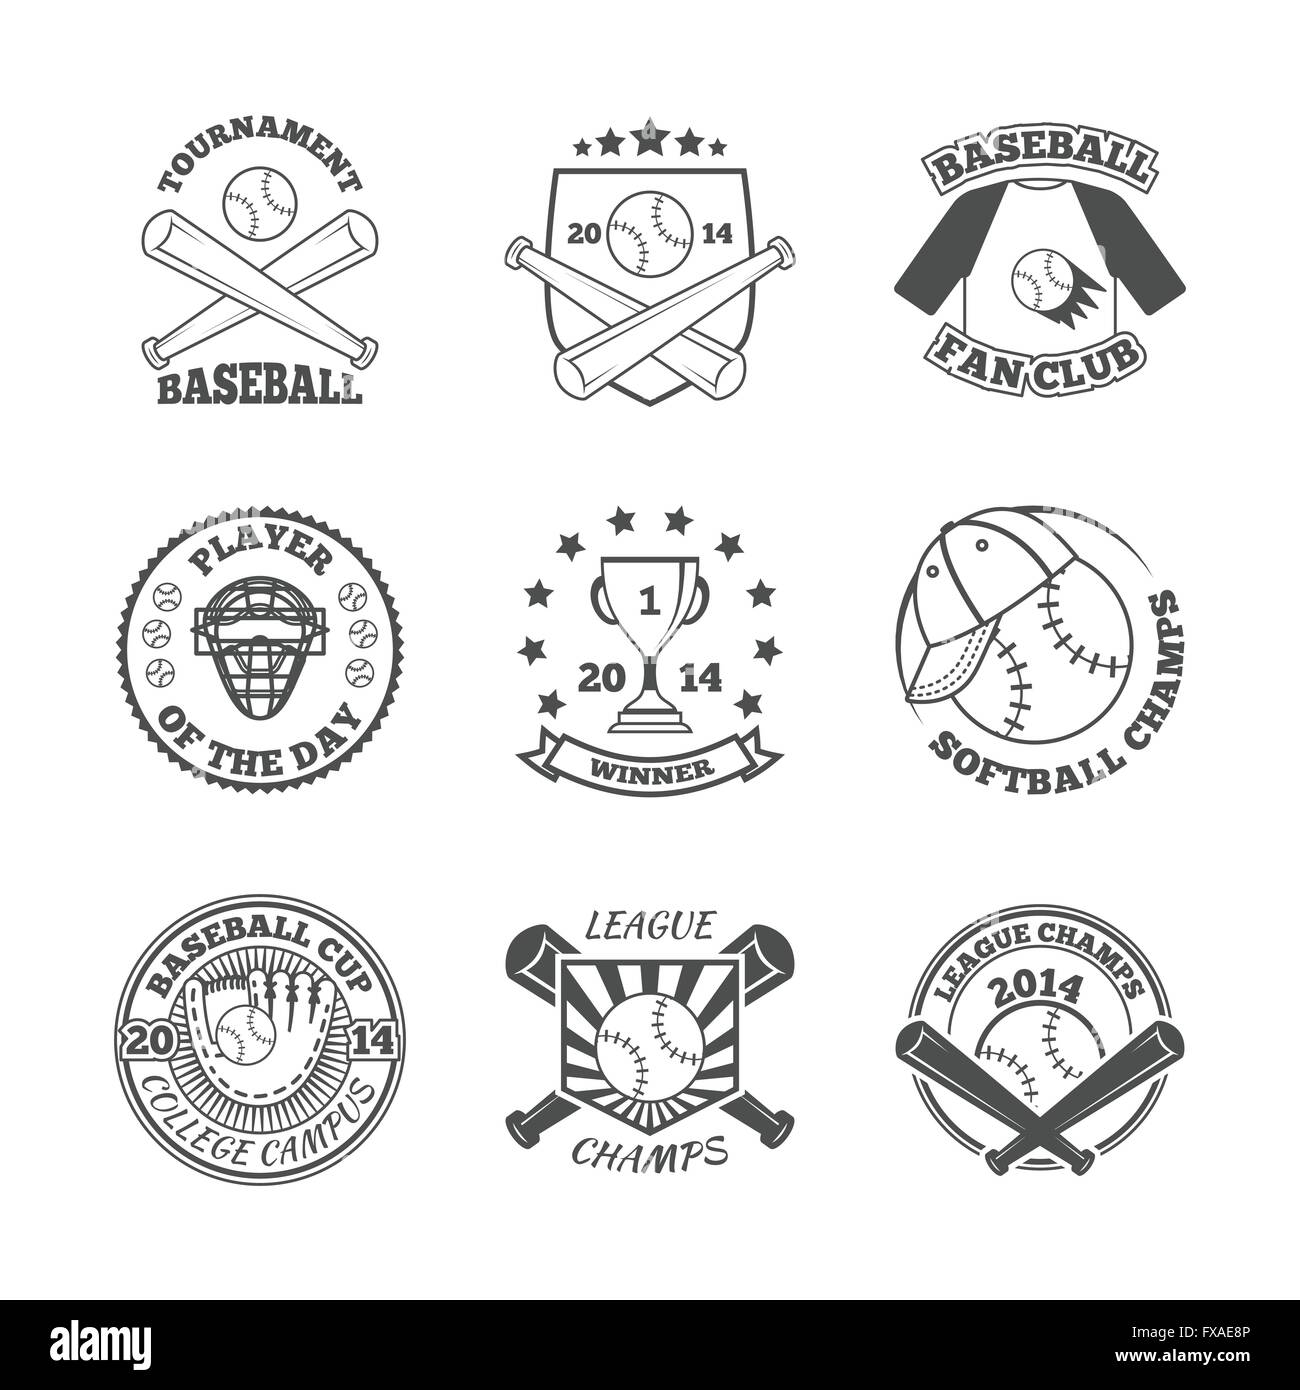 Baseball labels icons set Stock Vector